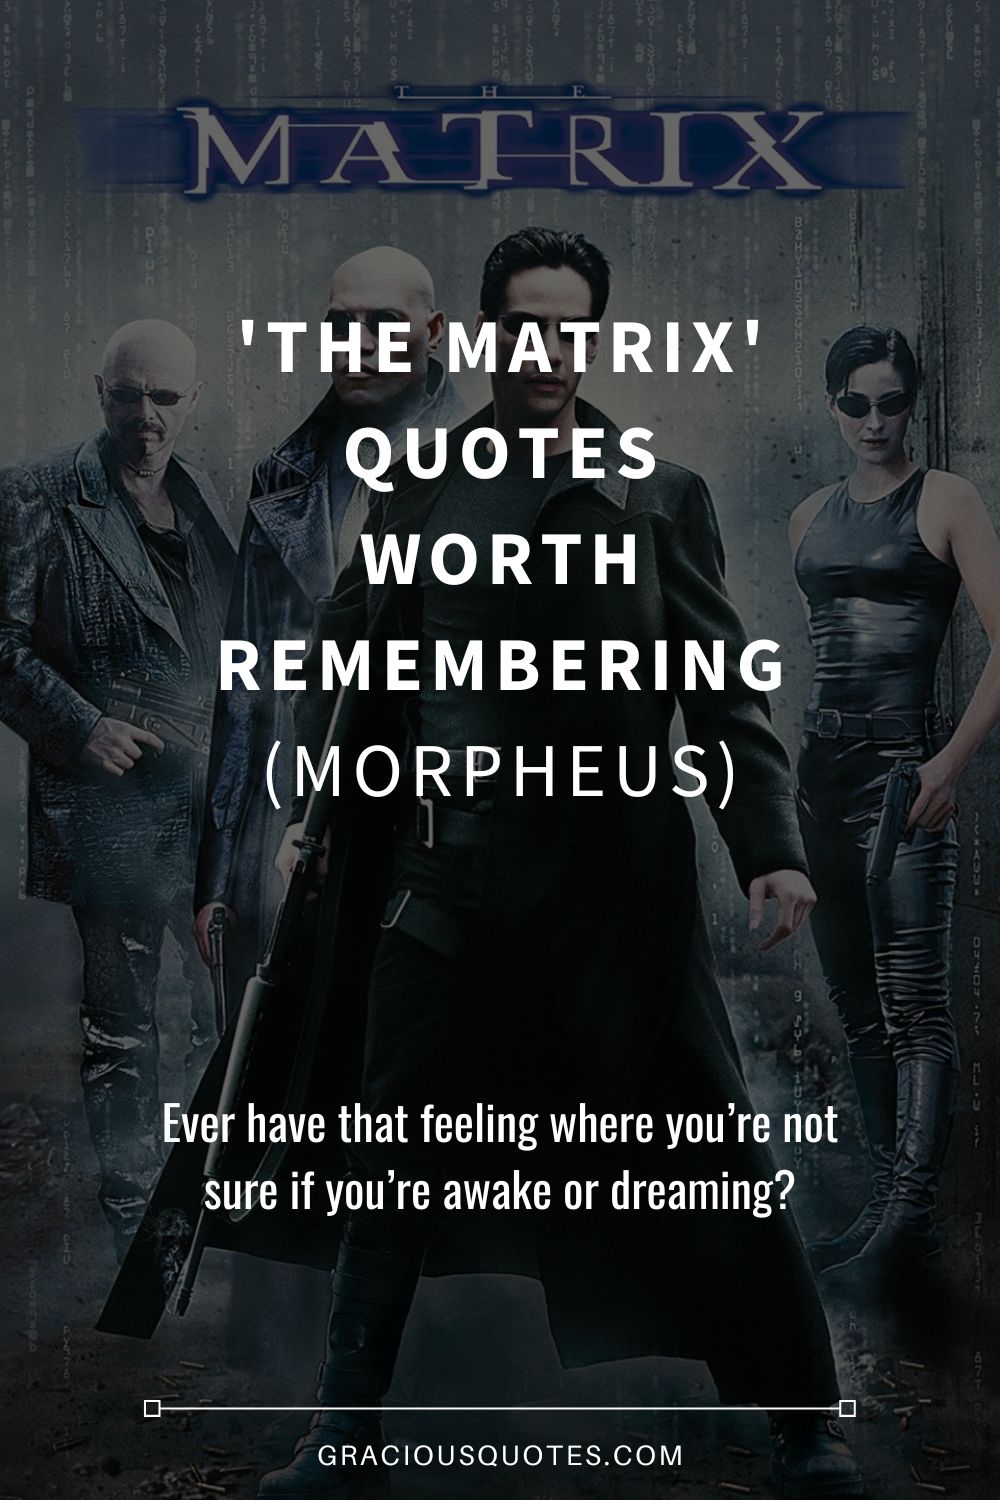 'The Matrix' Quotes Worth Remembering (MORPHEUS) - Gracious Quotes